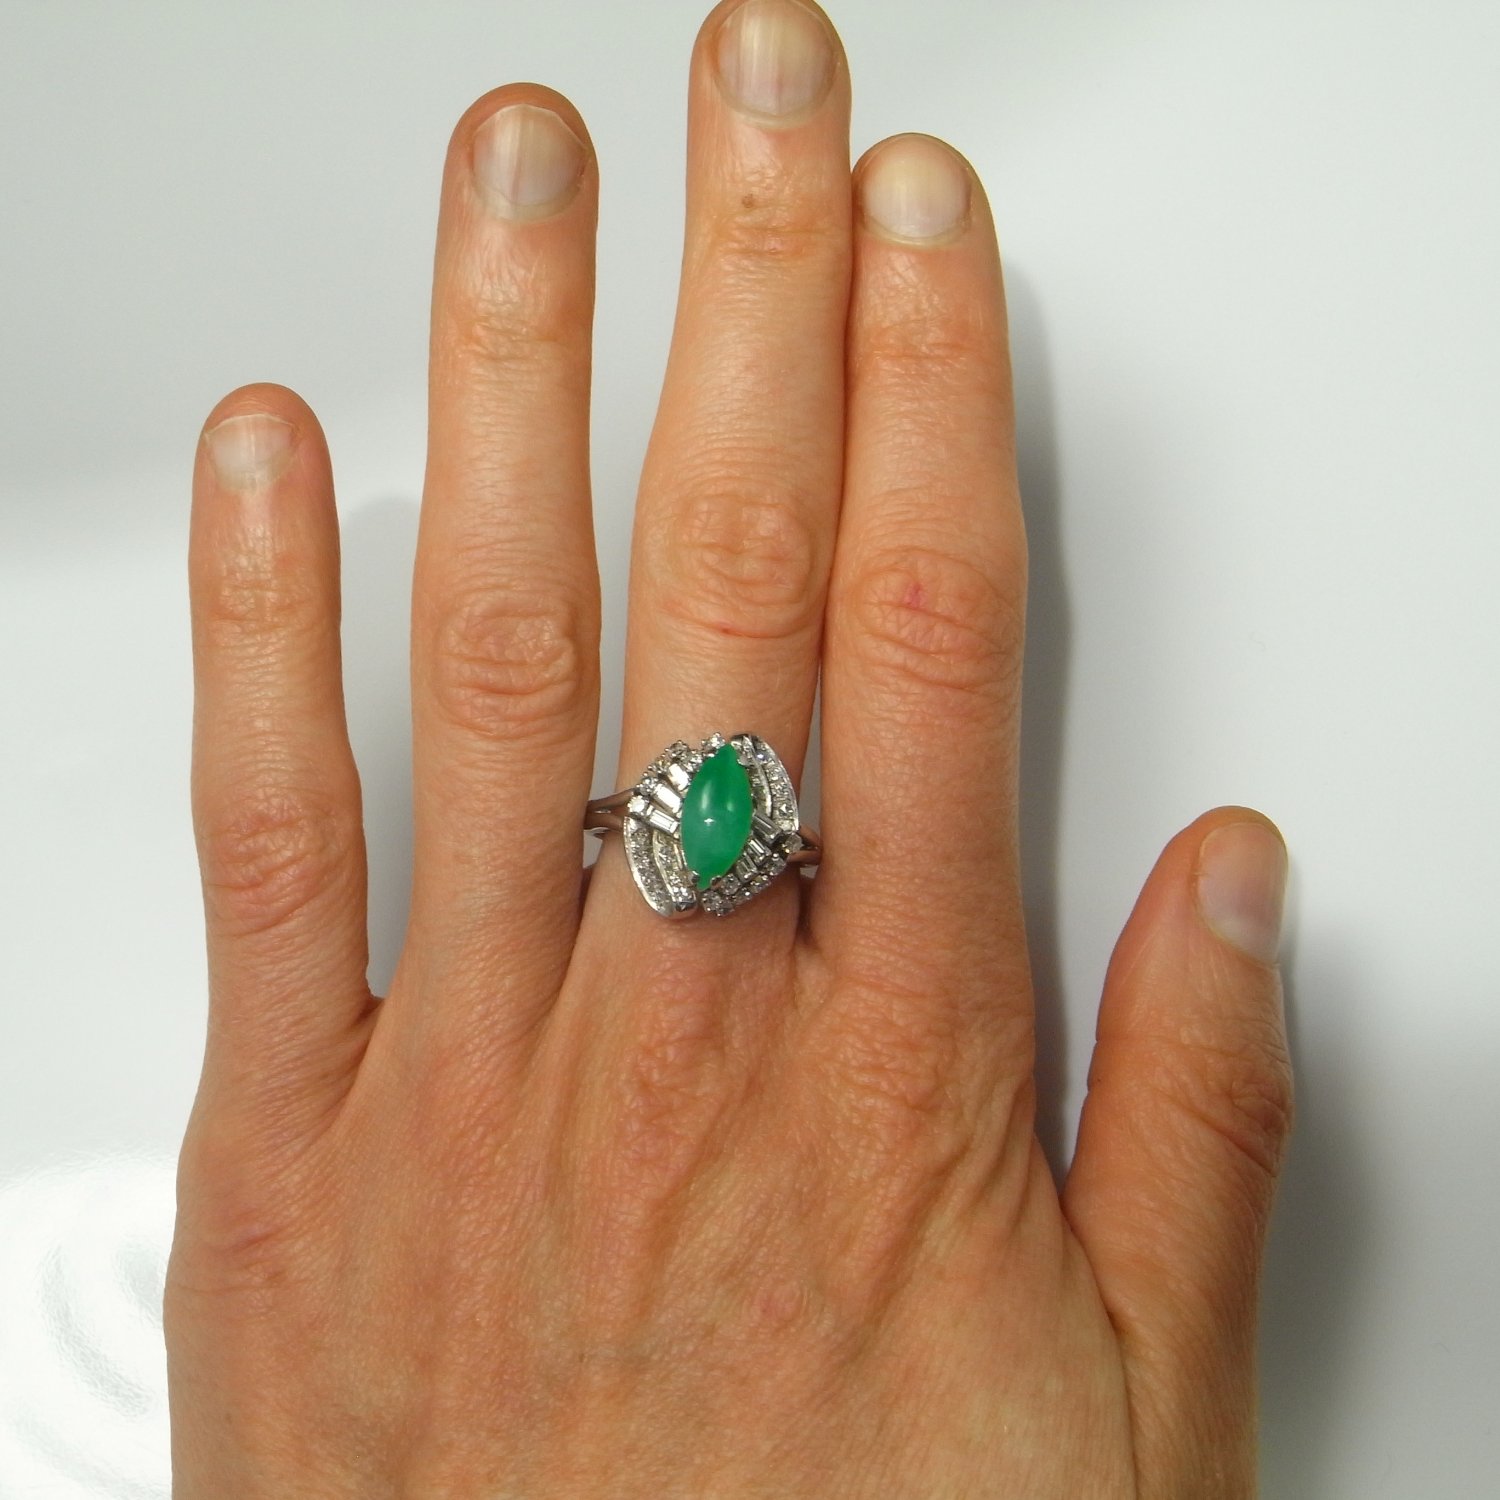 Vivid Green UNTREATED Jadeite Jade Diamond Engagement Ring 18K White Gold Art Deco Handmade One of a Kind Unique Wedding Anniversary